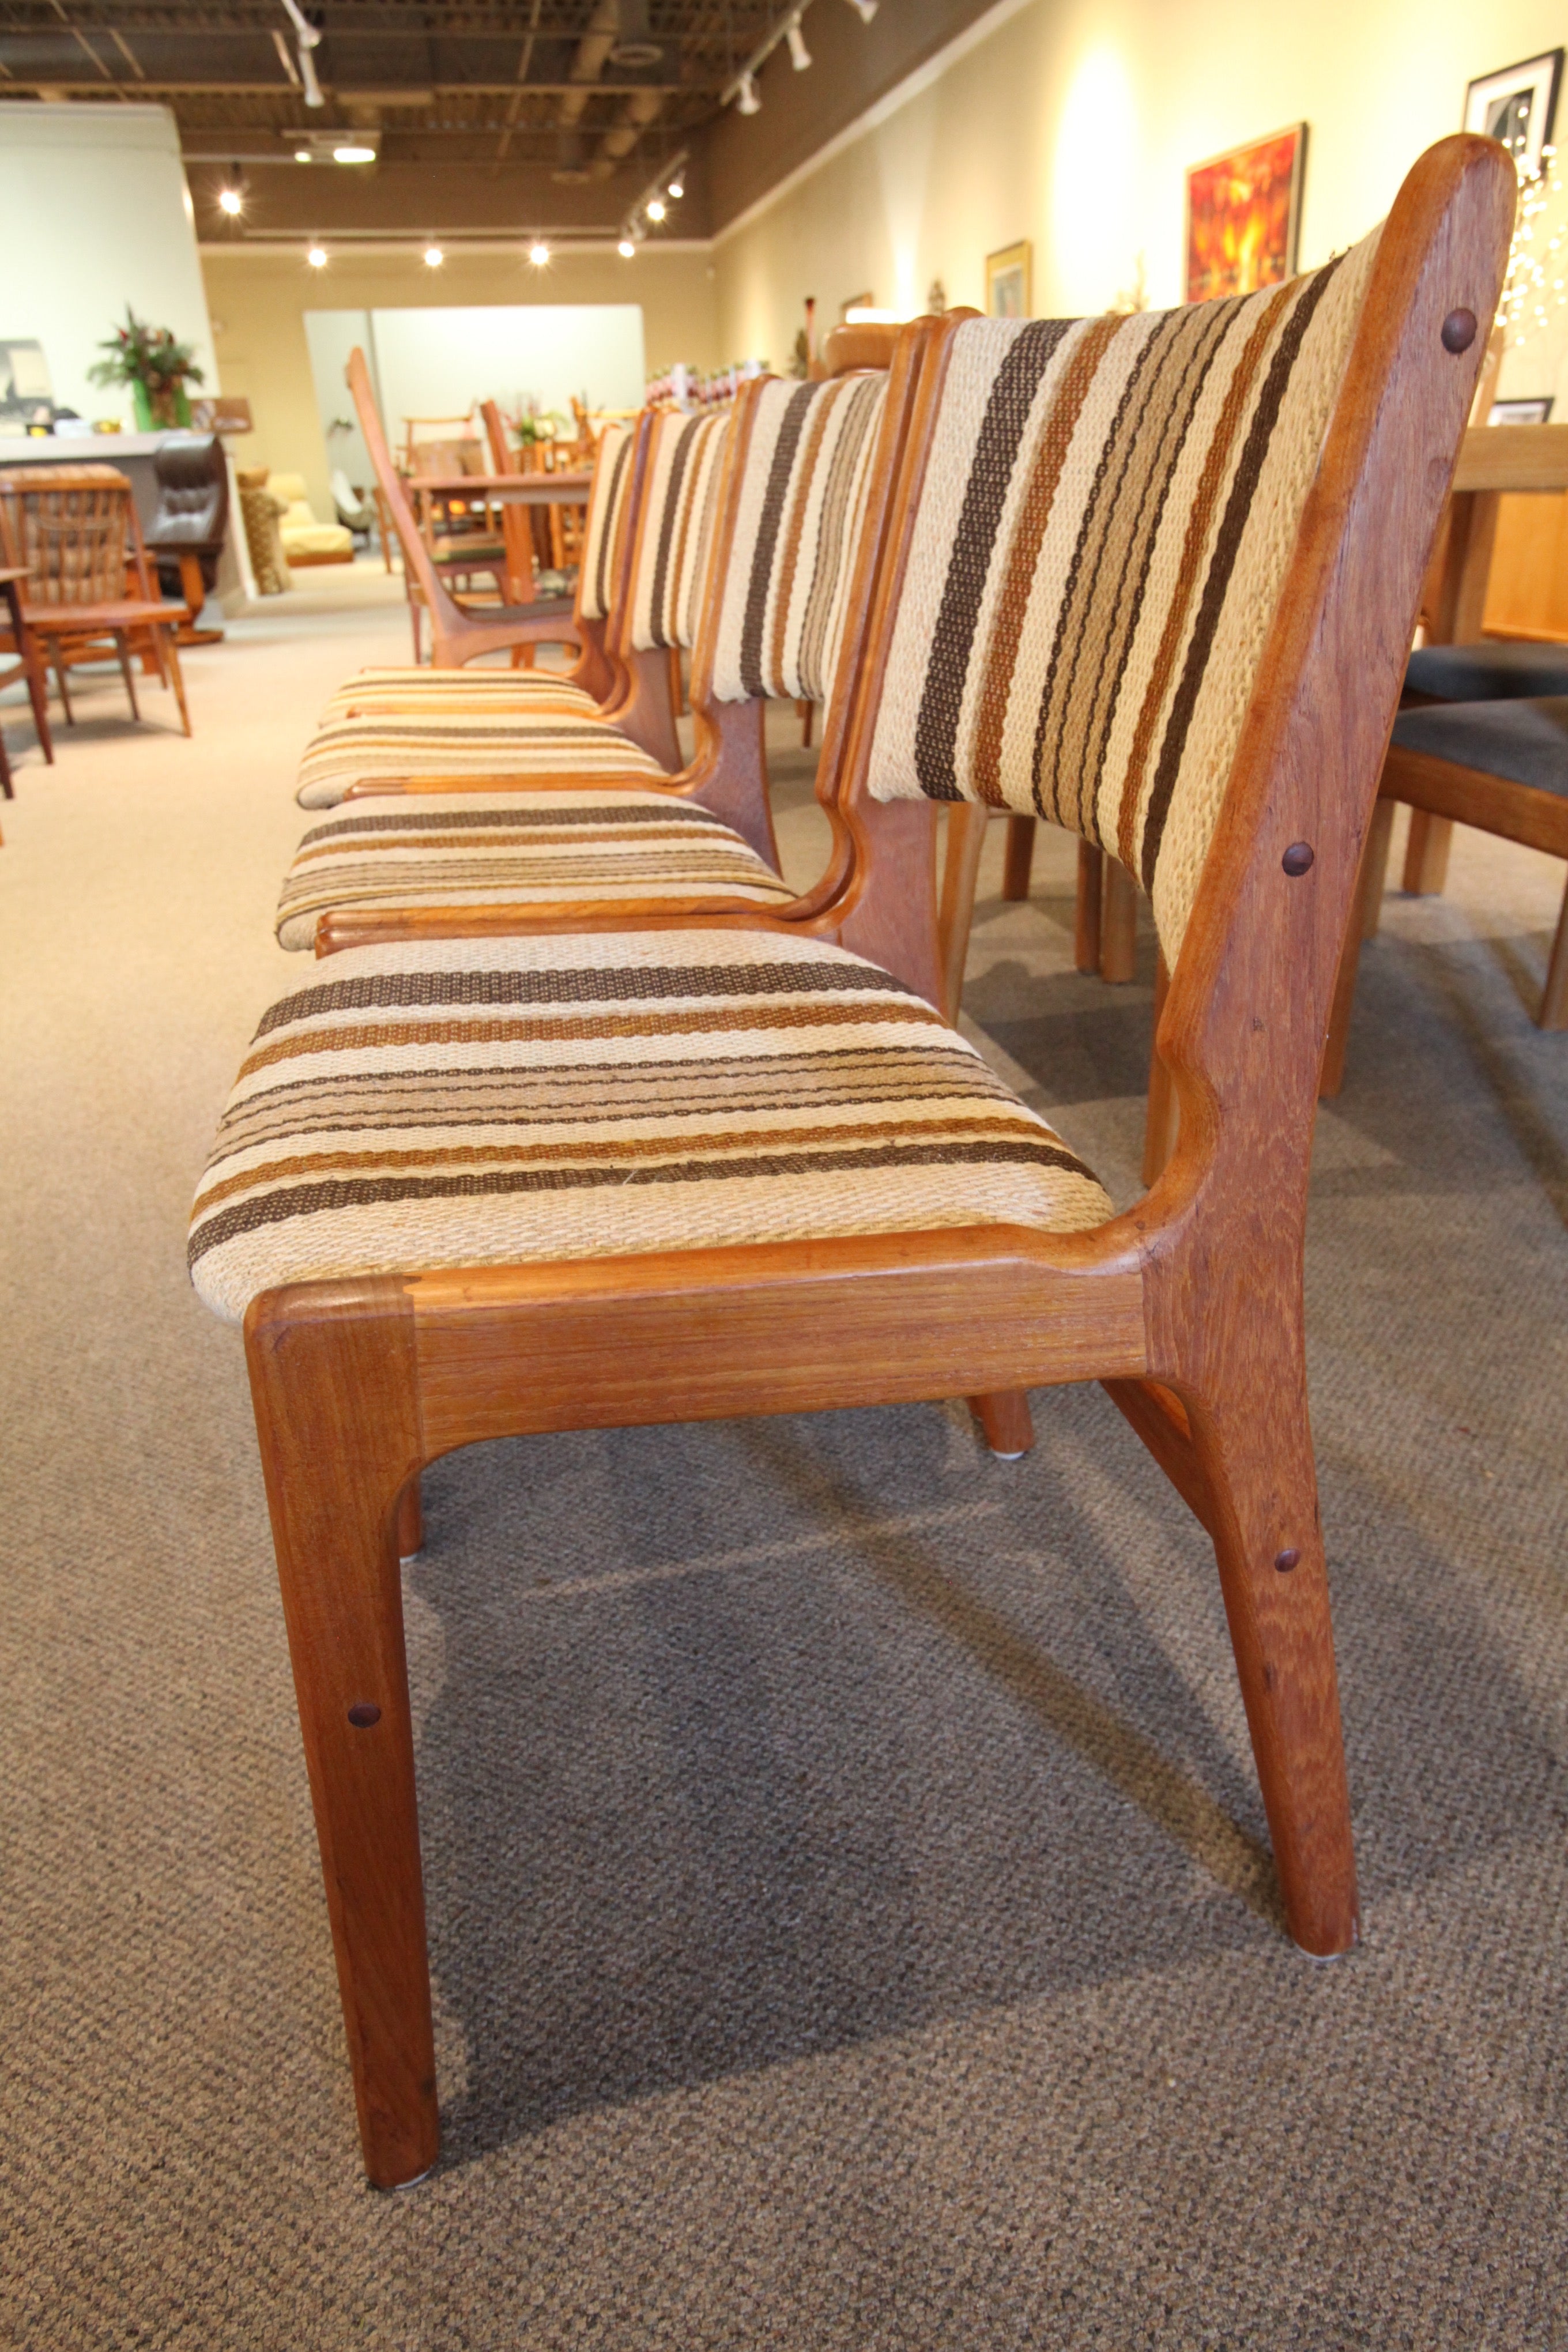 Set of 4 Vintage Teak Chairs